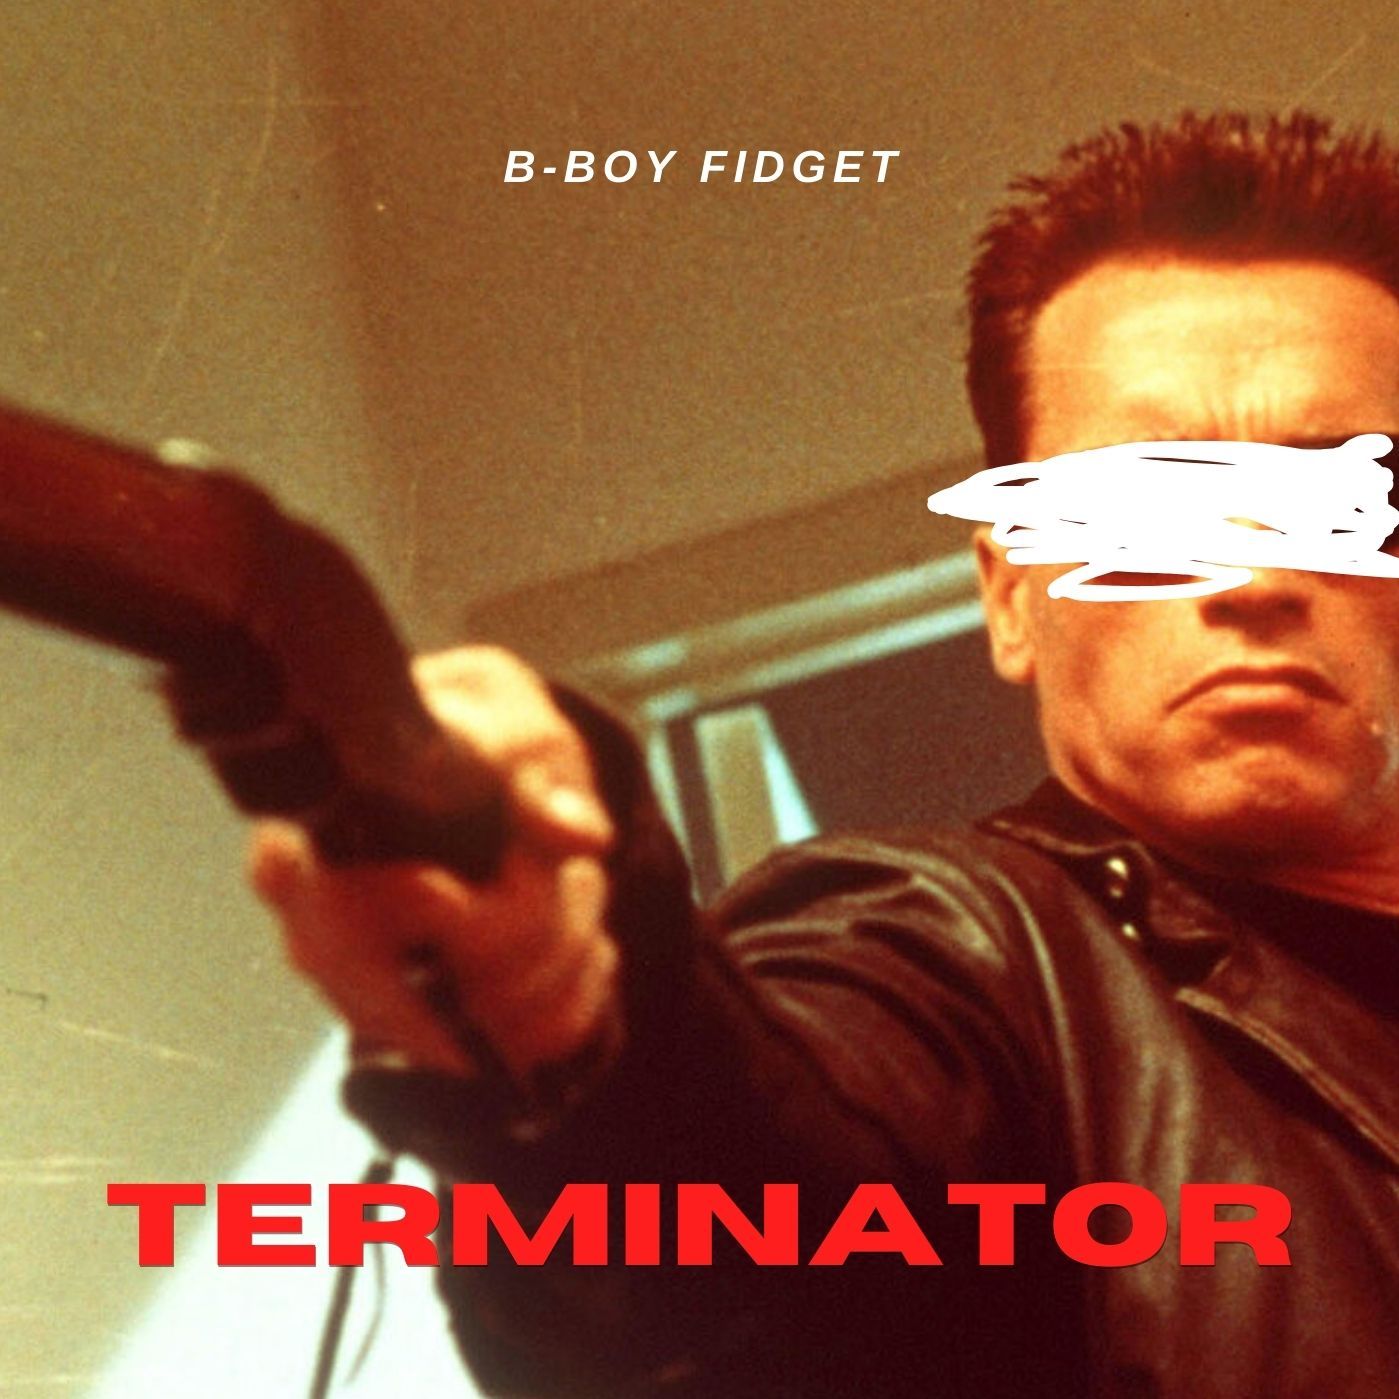 B-Boy Fidget – “Terminator”